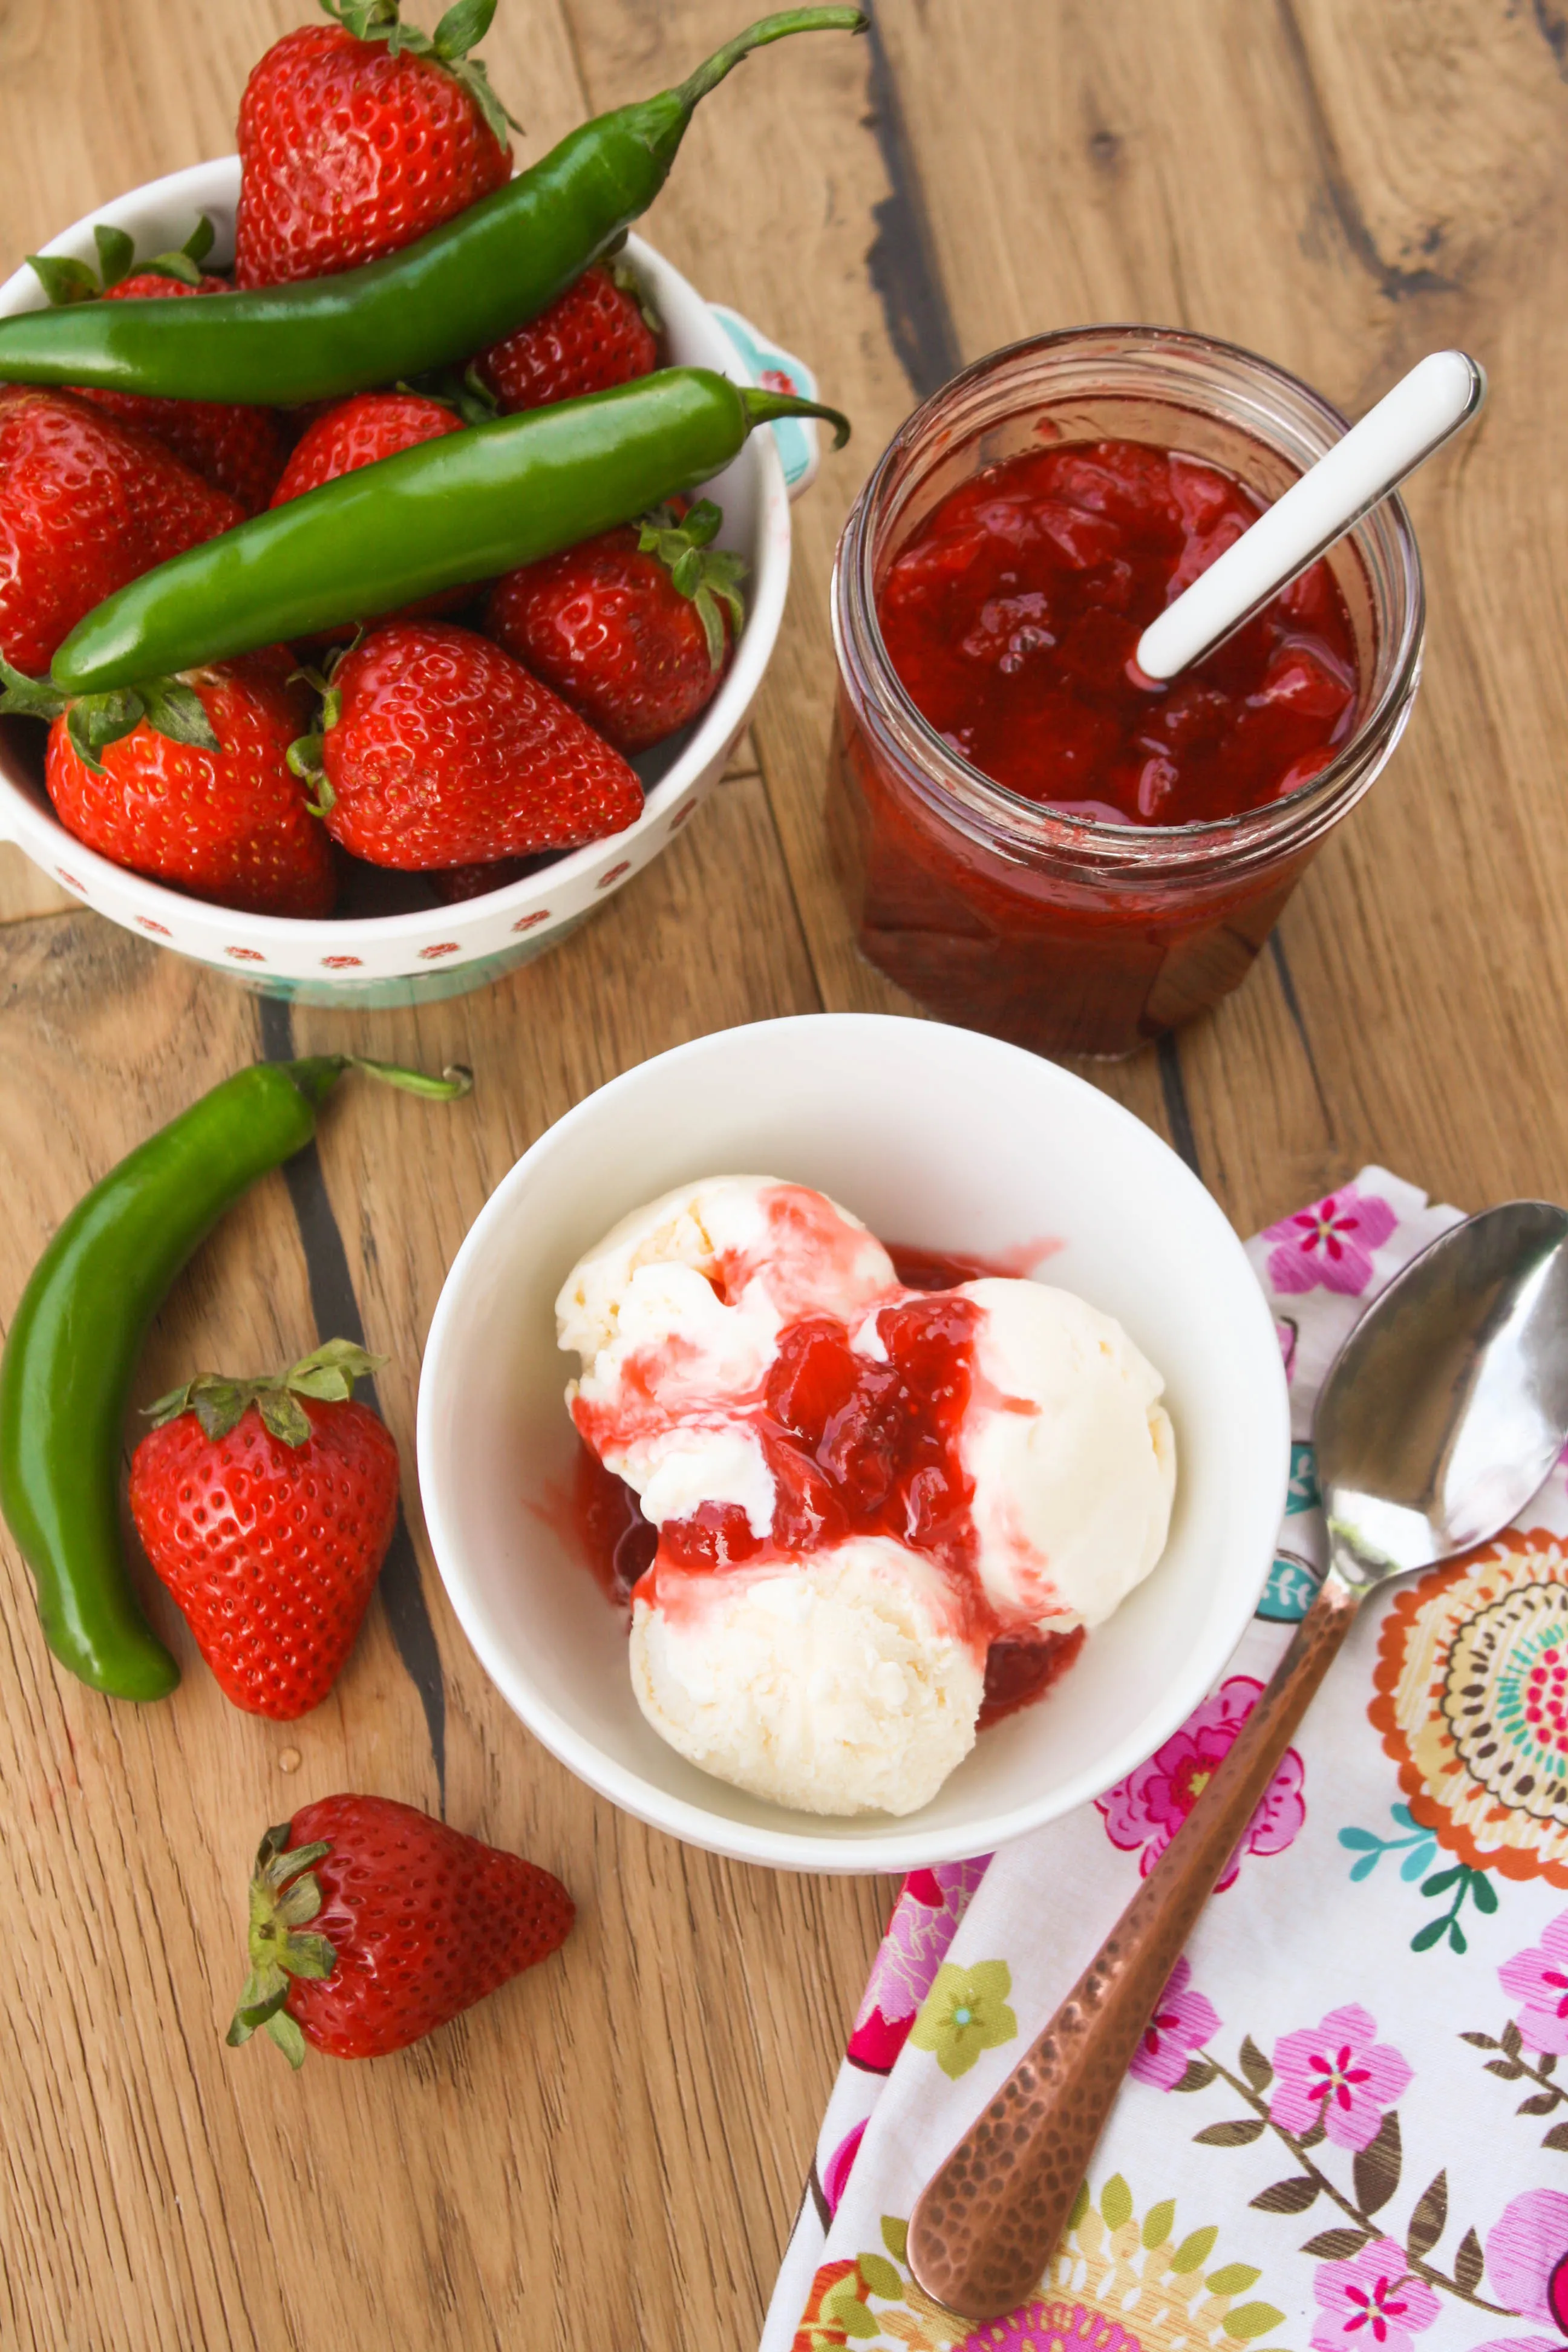 Small Batch Strawberry-Serrano Refrigerator Jam is a fabulous seasonal treat! This jam is so easy to make, too!